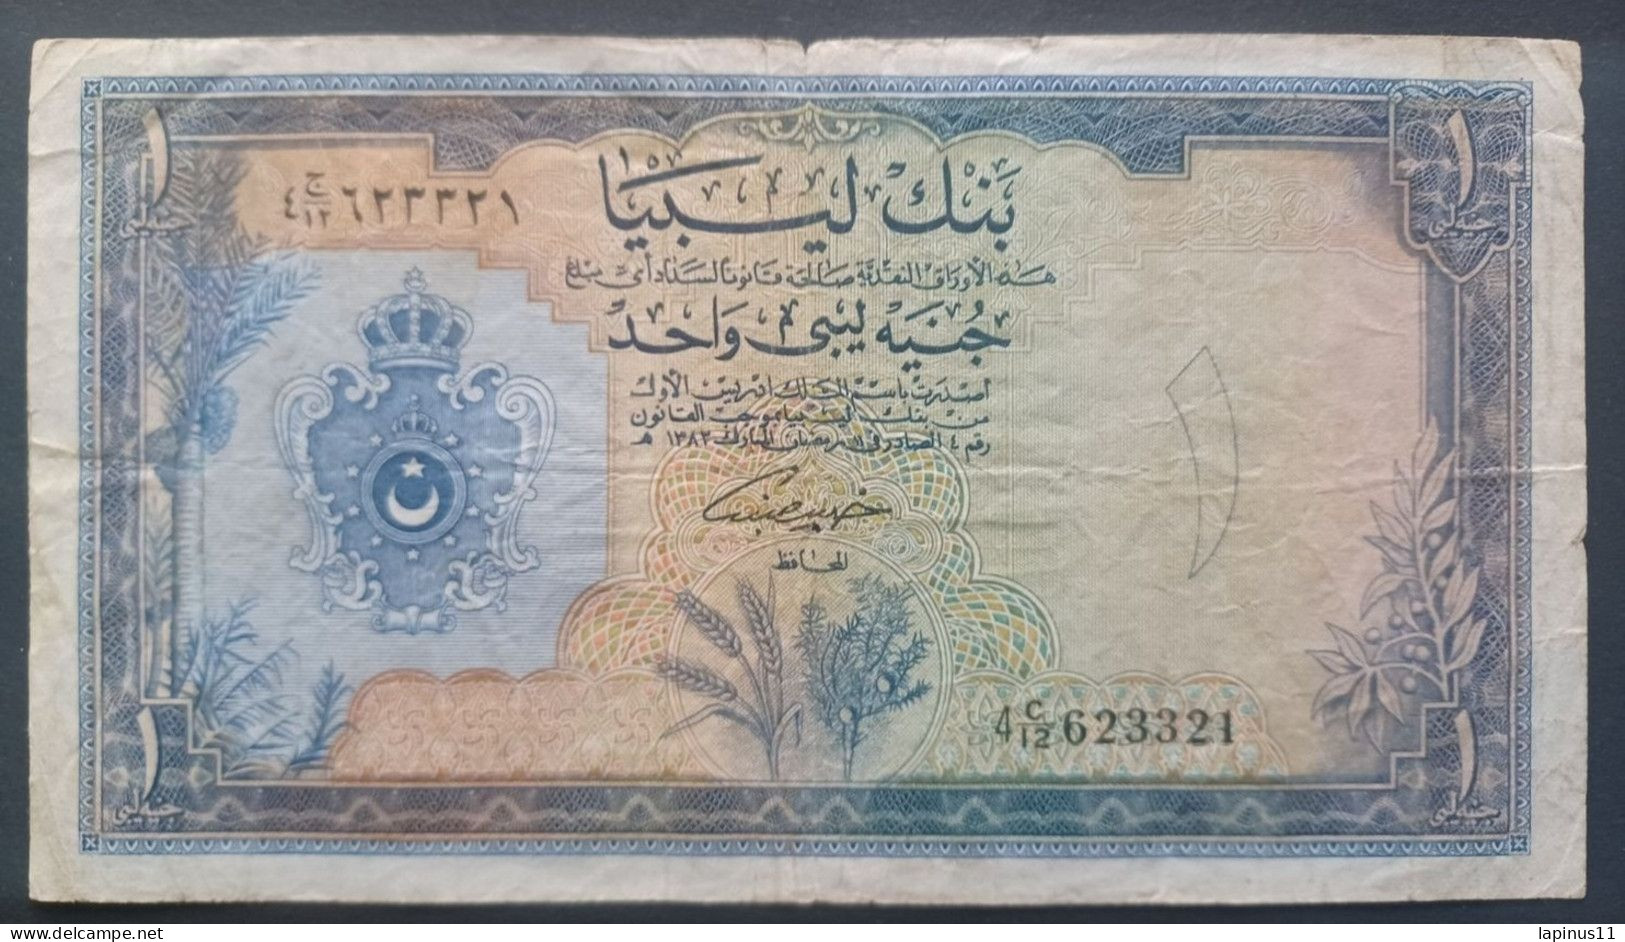 BANKNOTE LIBYA LIBIA 1 POUND 1963 VERY RARE CIRCULATED - Libyen